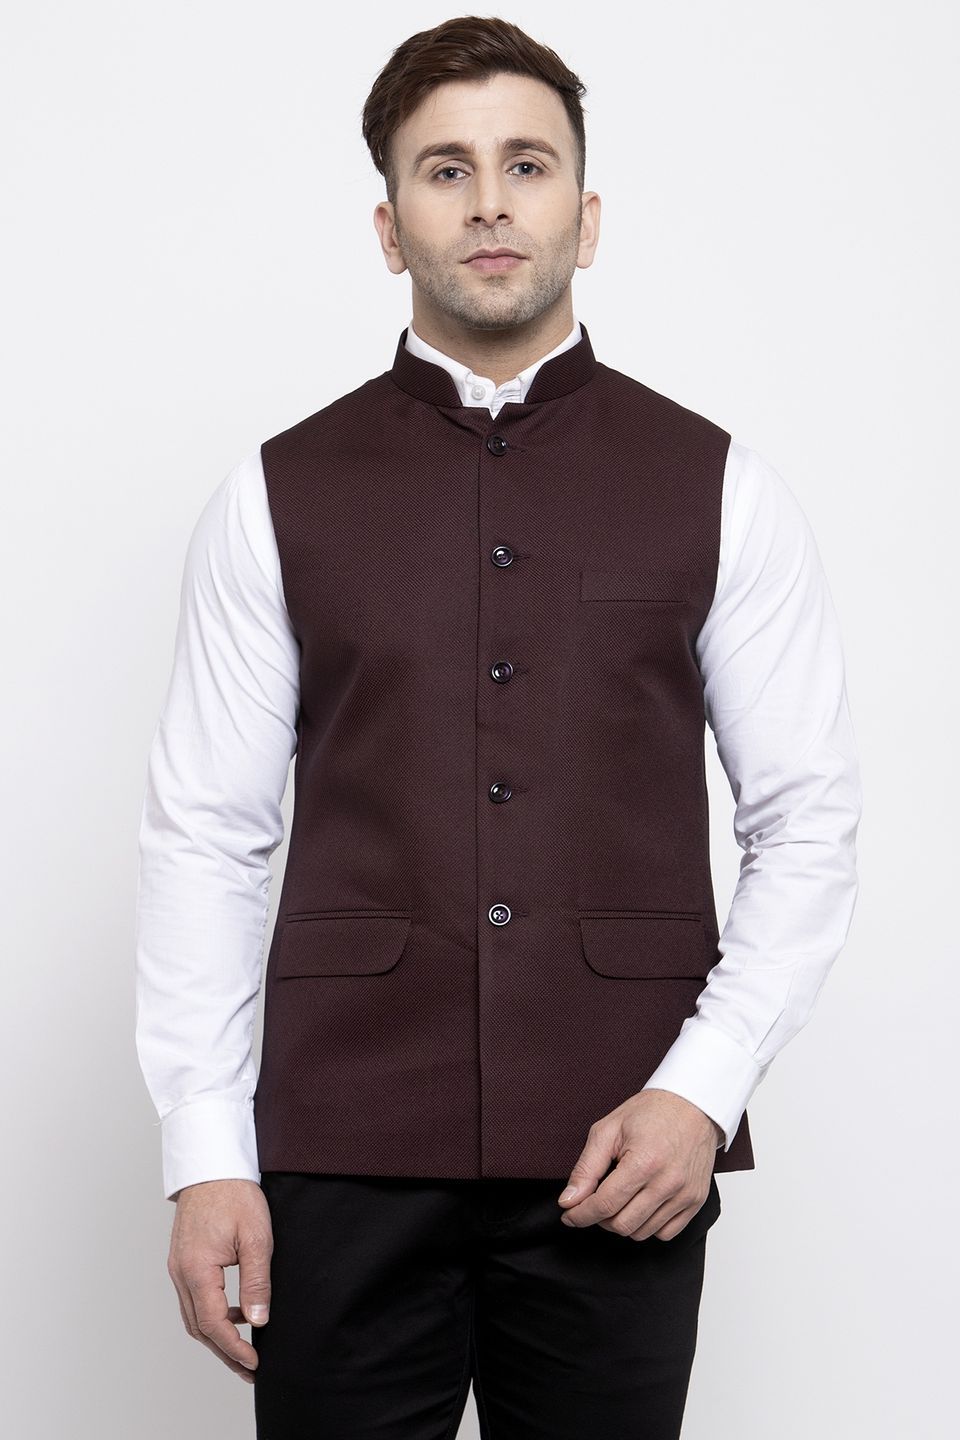 WINTAGE Men's Poly Cotton Festive and Casual Nehru Jacket Vest Waistcoat : Dark Brown